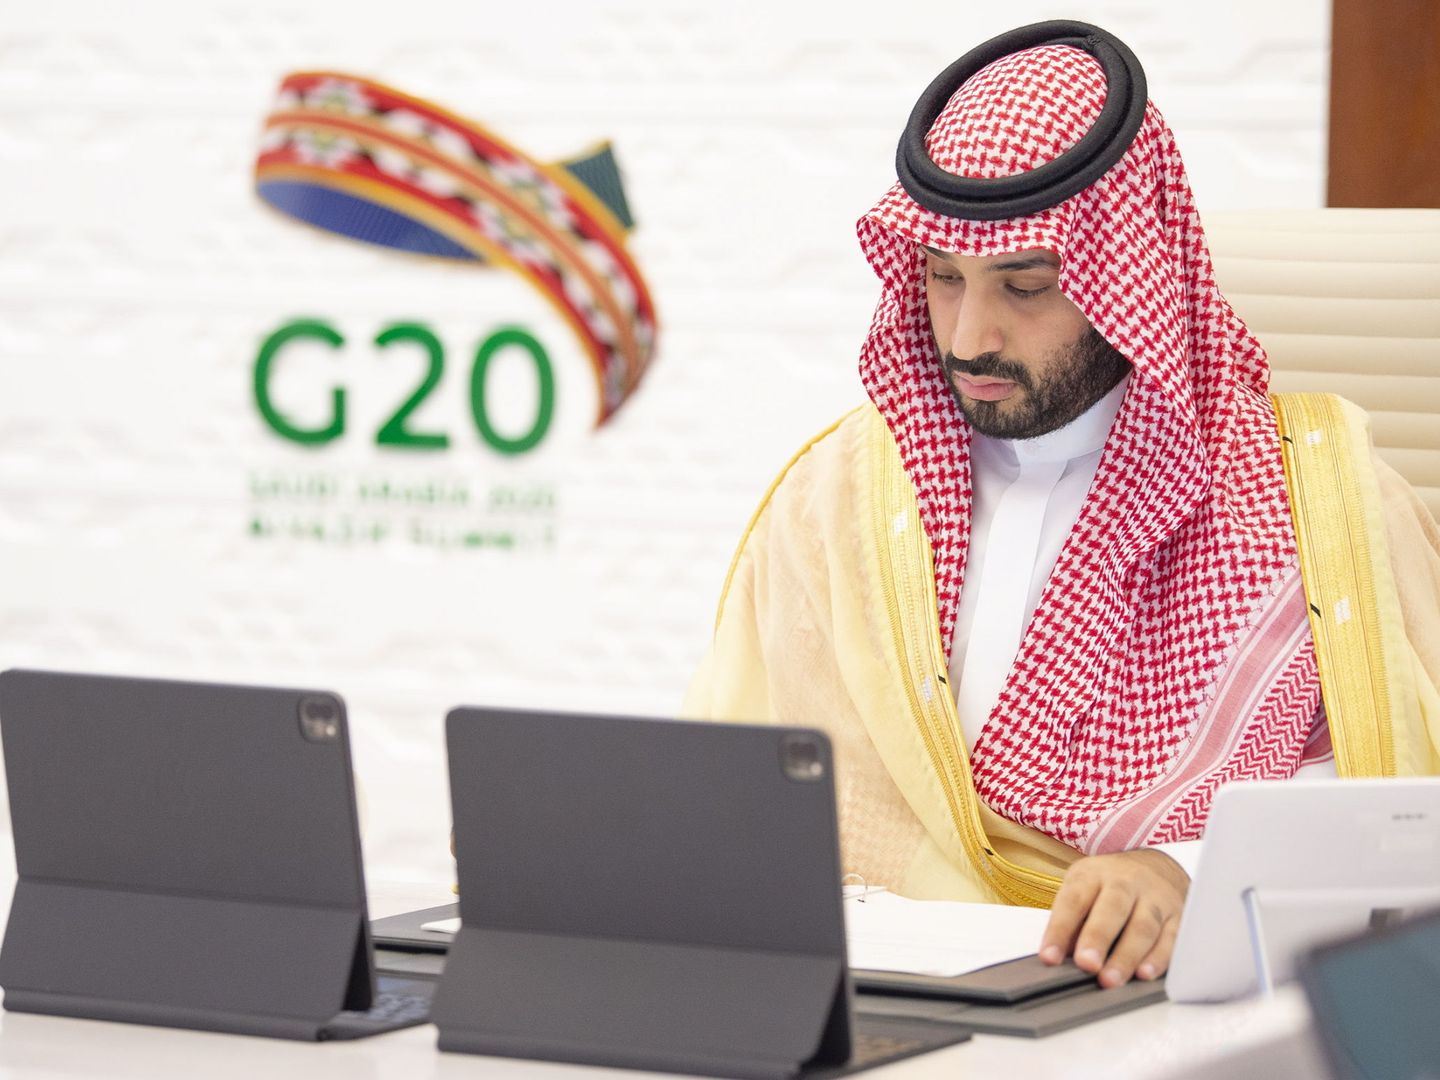 El príncipe saudí Mohammed bin Salman. (Reuters)